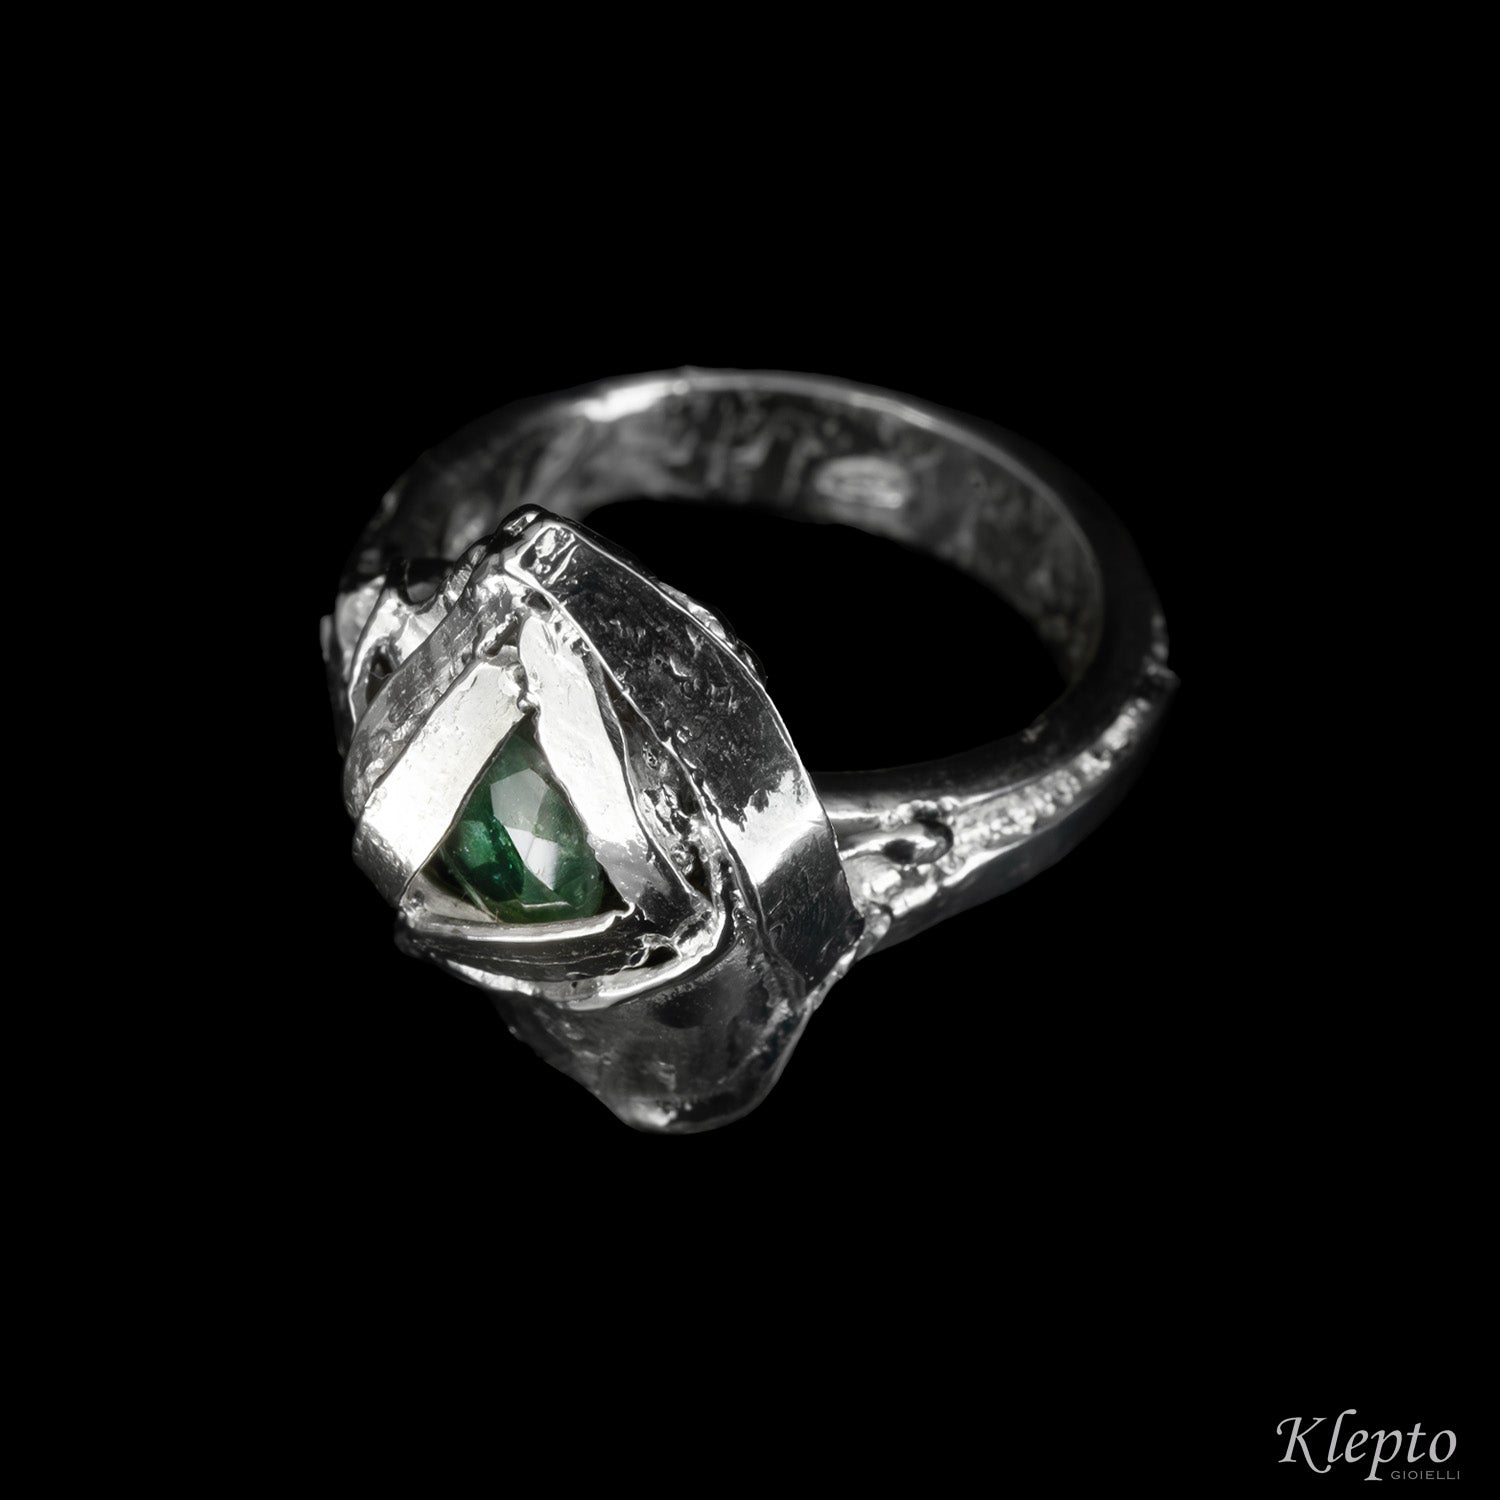 Silnova Silver Ring with Green Tourmaline